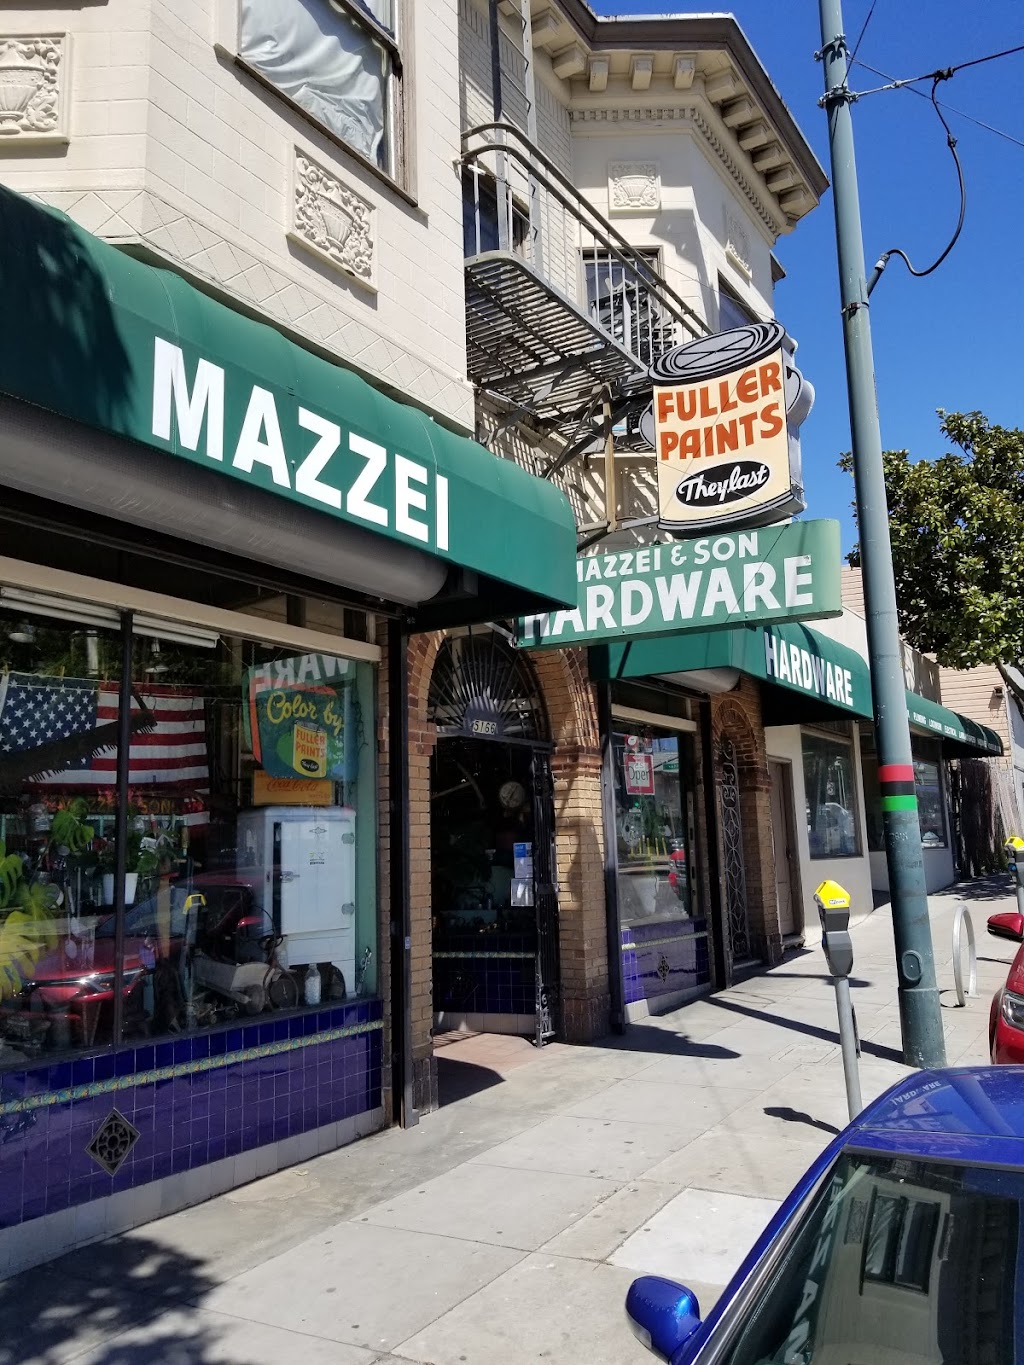 G Mazzei & Sons Hardware | 5166 3rd St, San Francisco, CA 94124 | Phone: (415) 822-2655